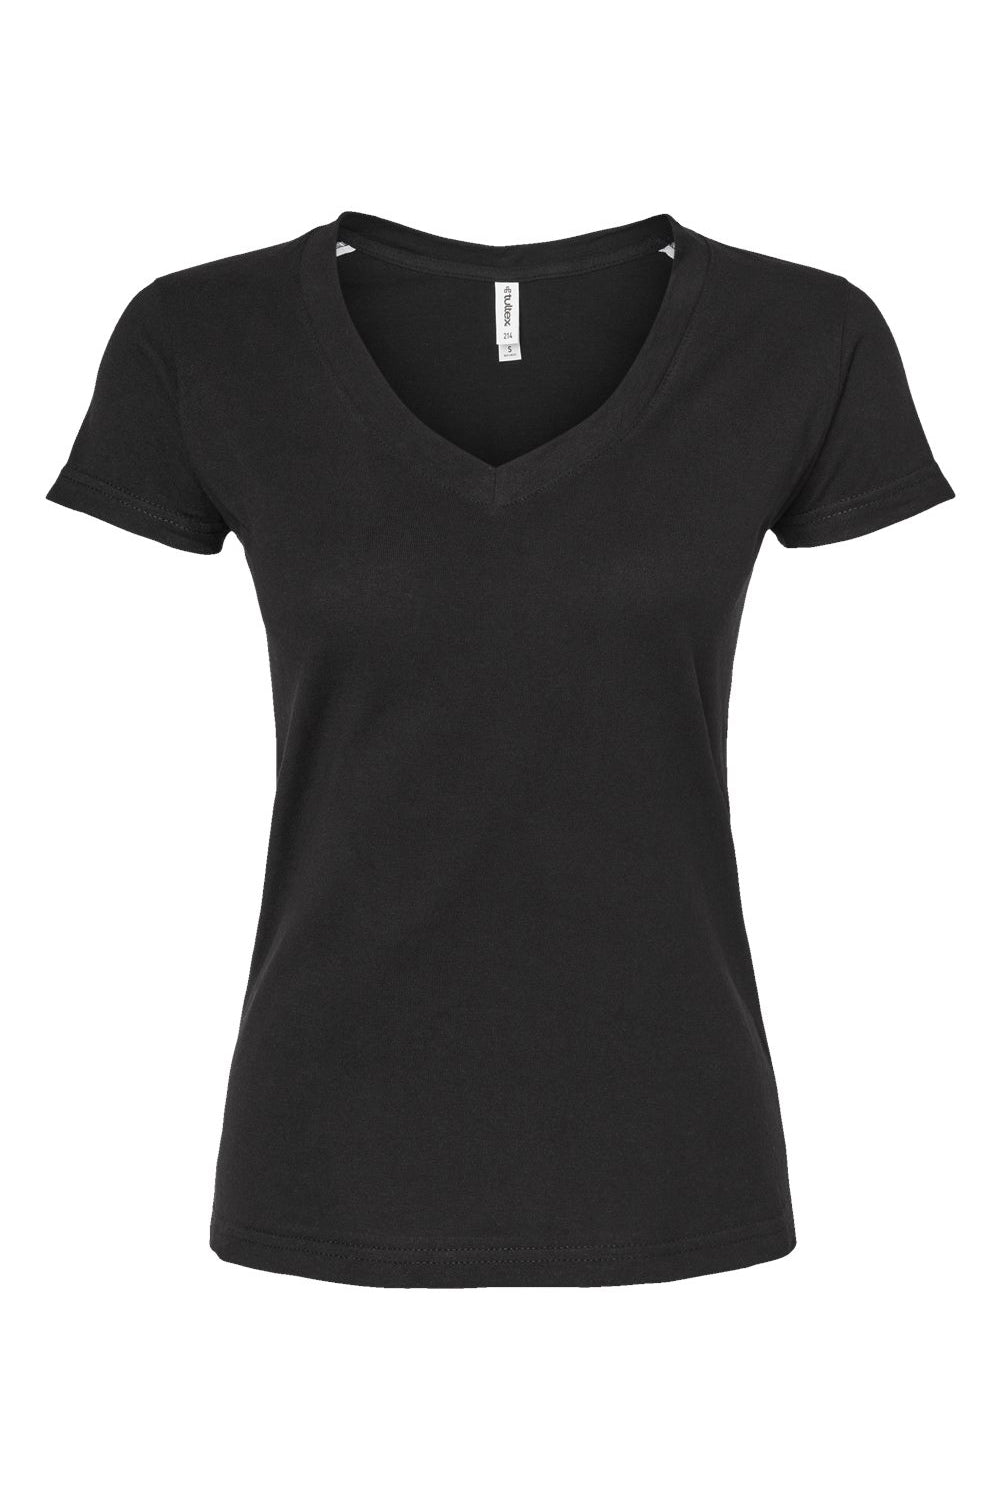 Tultex 214 Womens Fine Jersey Short Sleeve V-Neck T-Shirt Black Flat Front